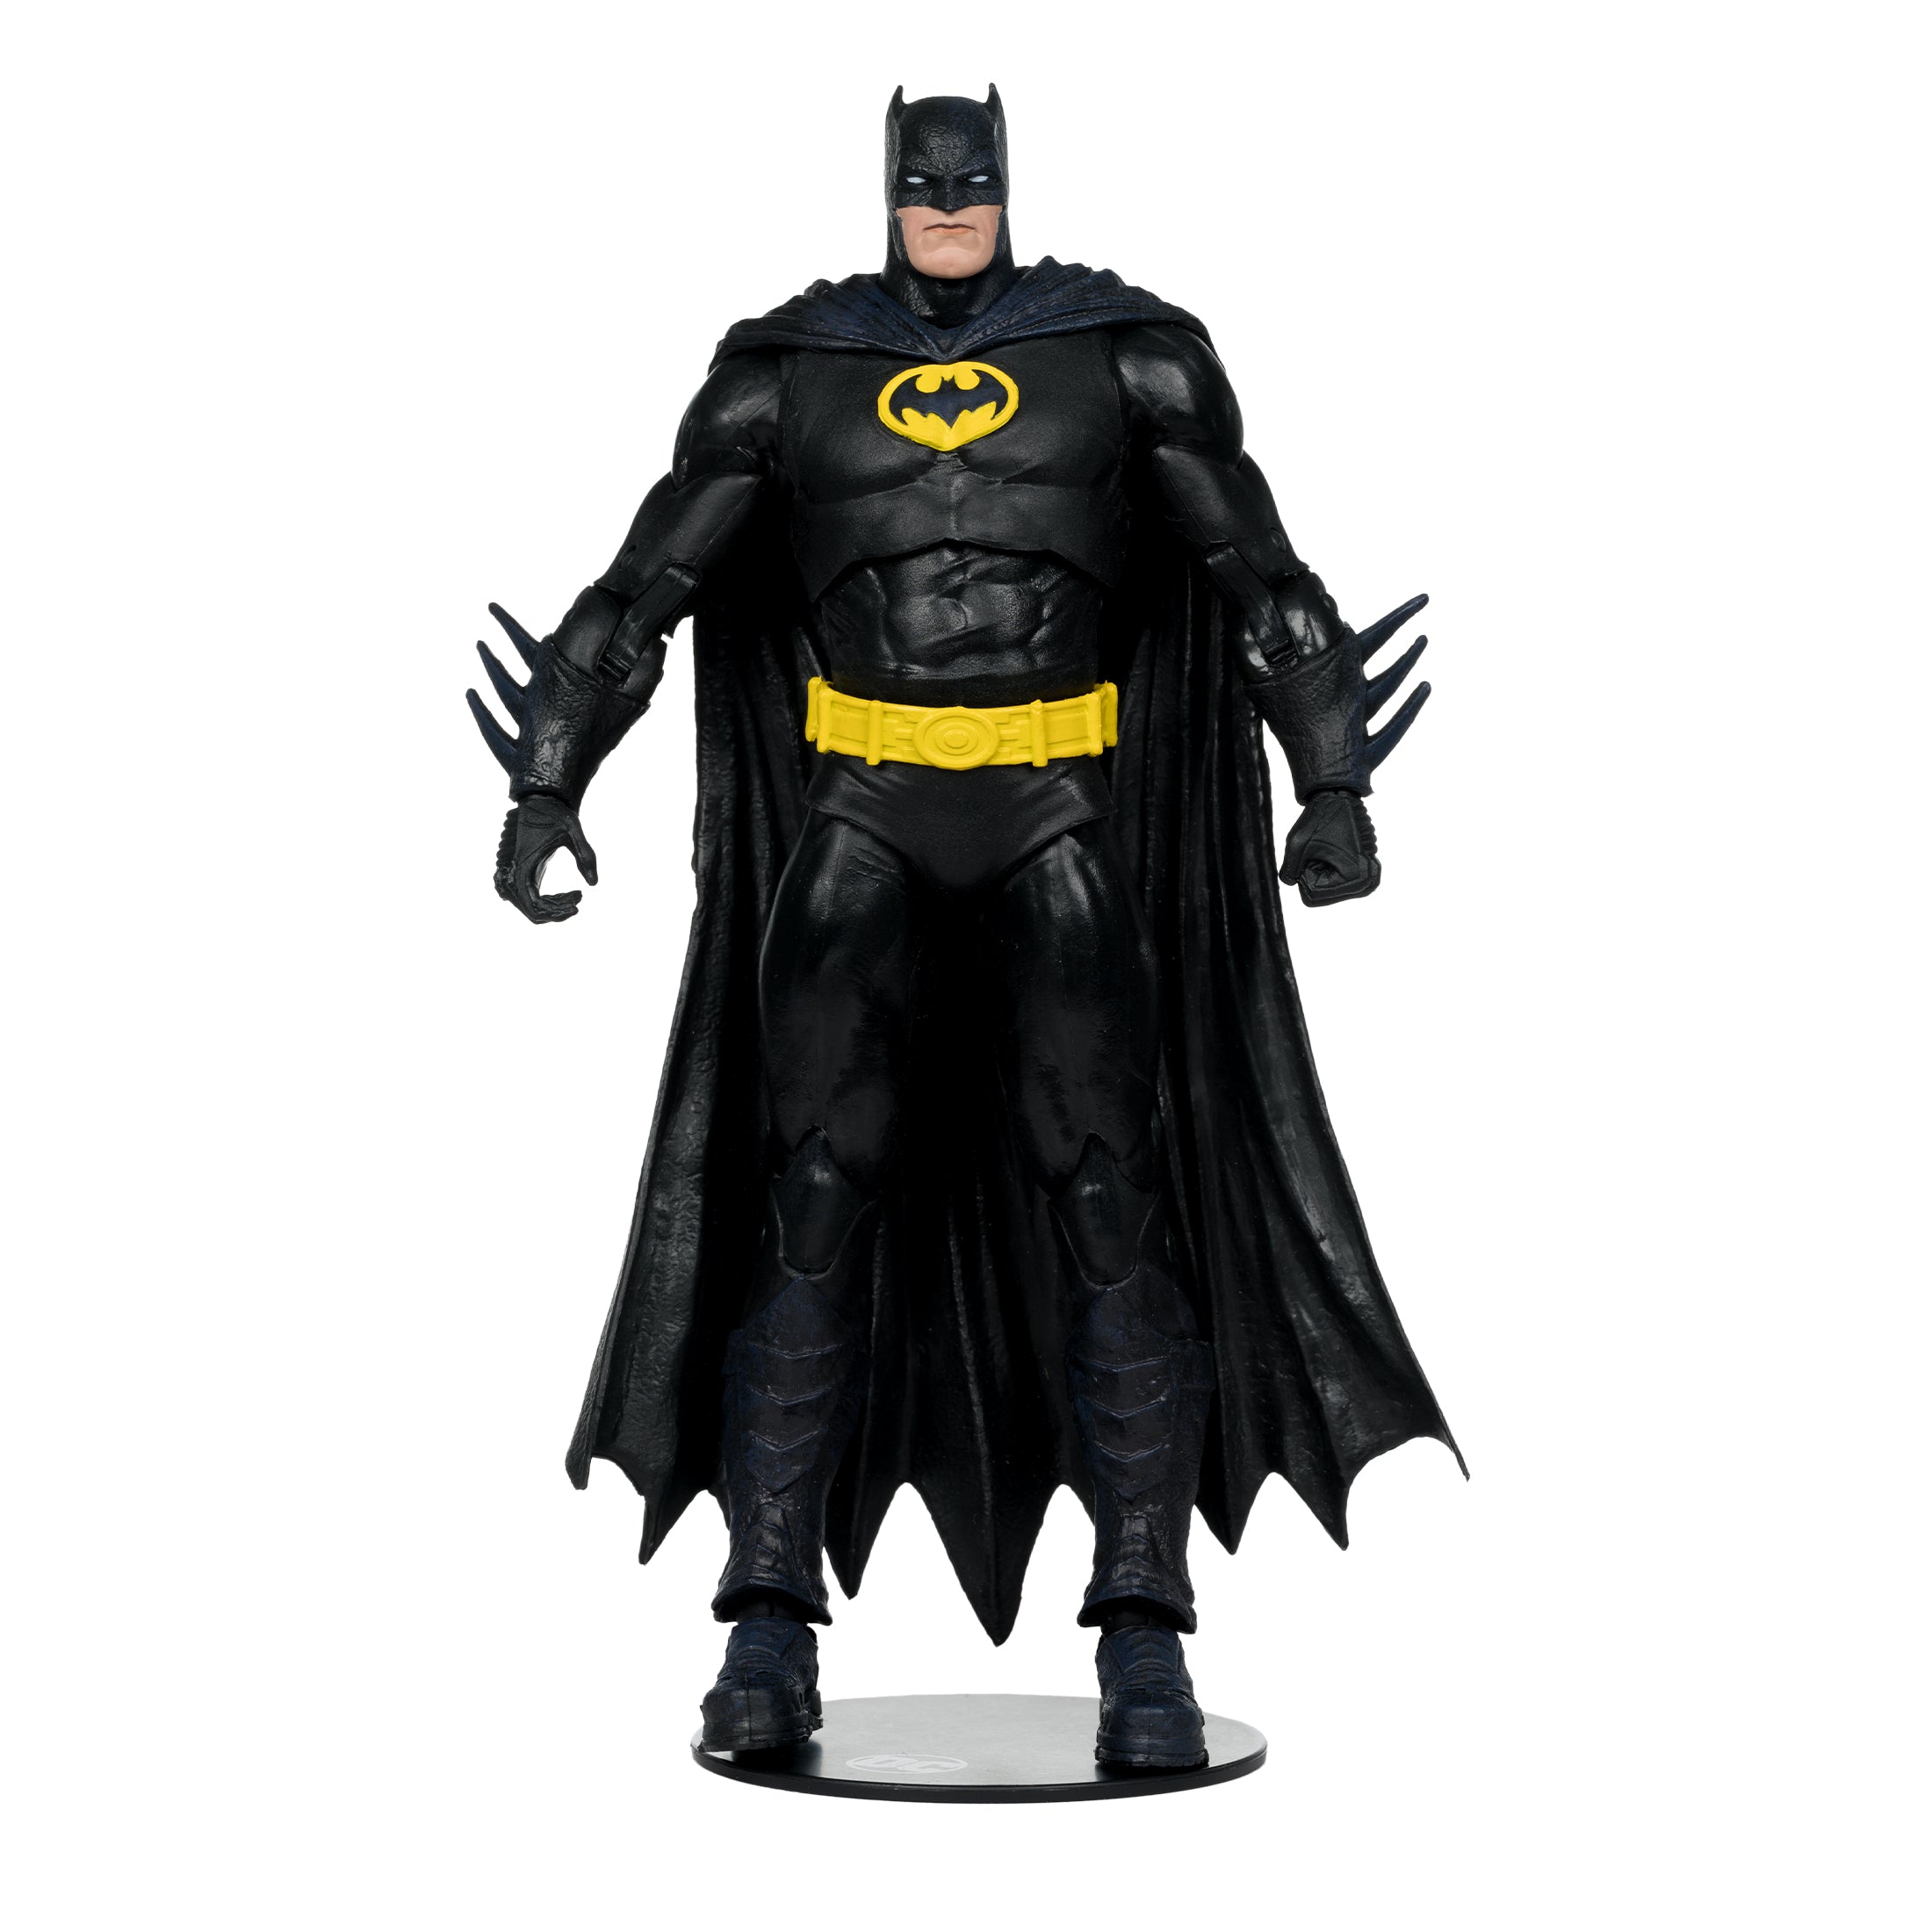 DC Multiverse JLA Batman BAF Plastic Man - McFarlane Toys